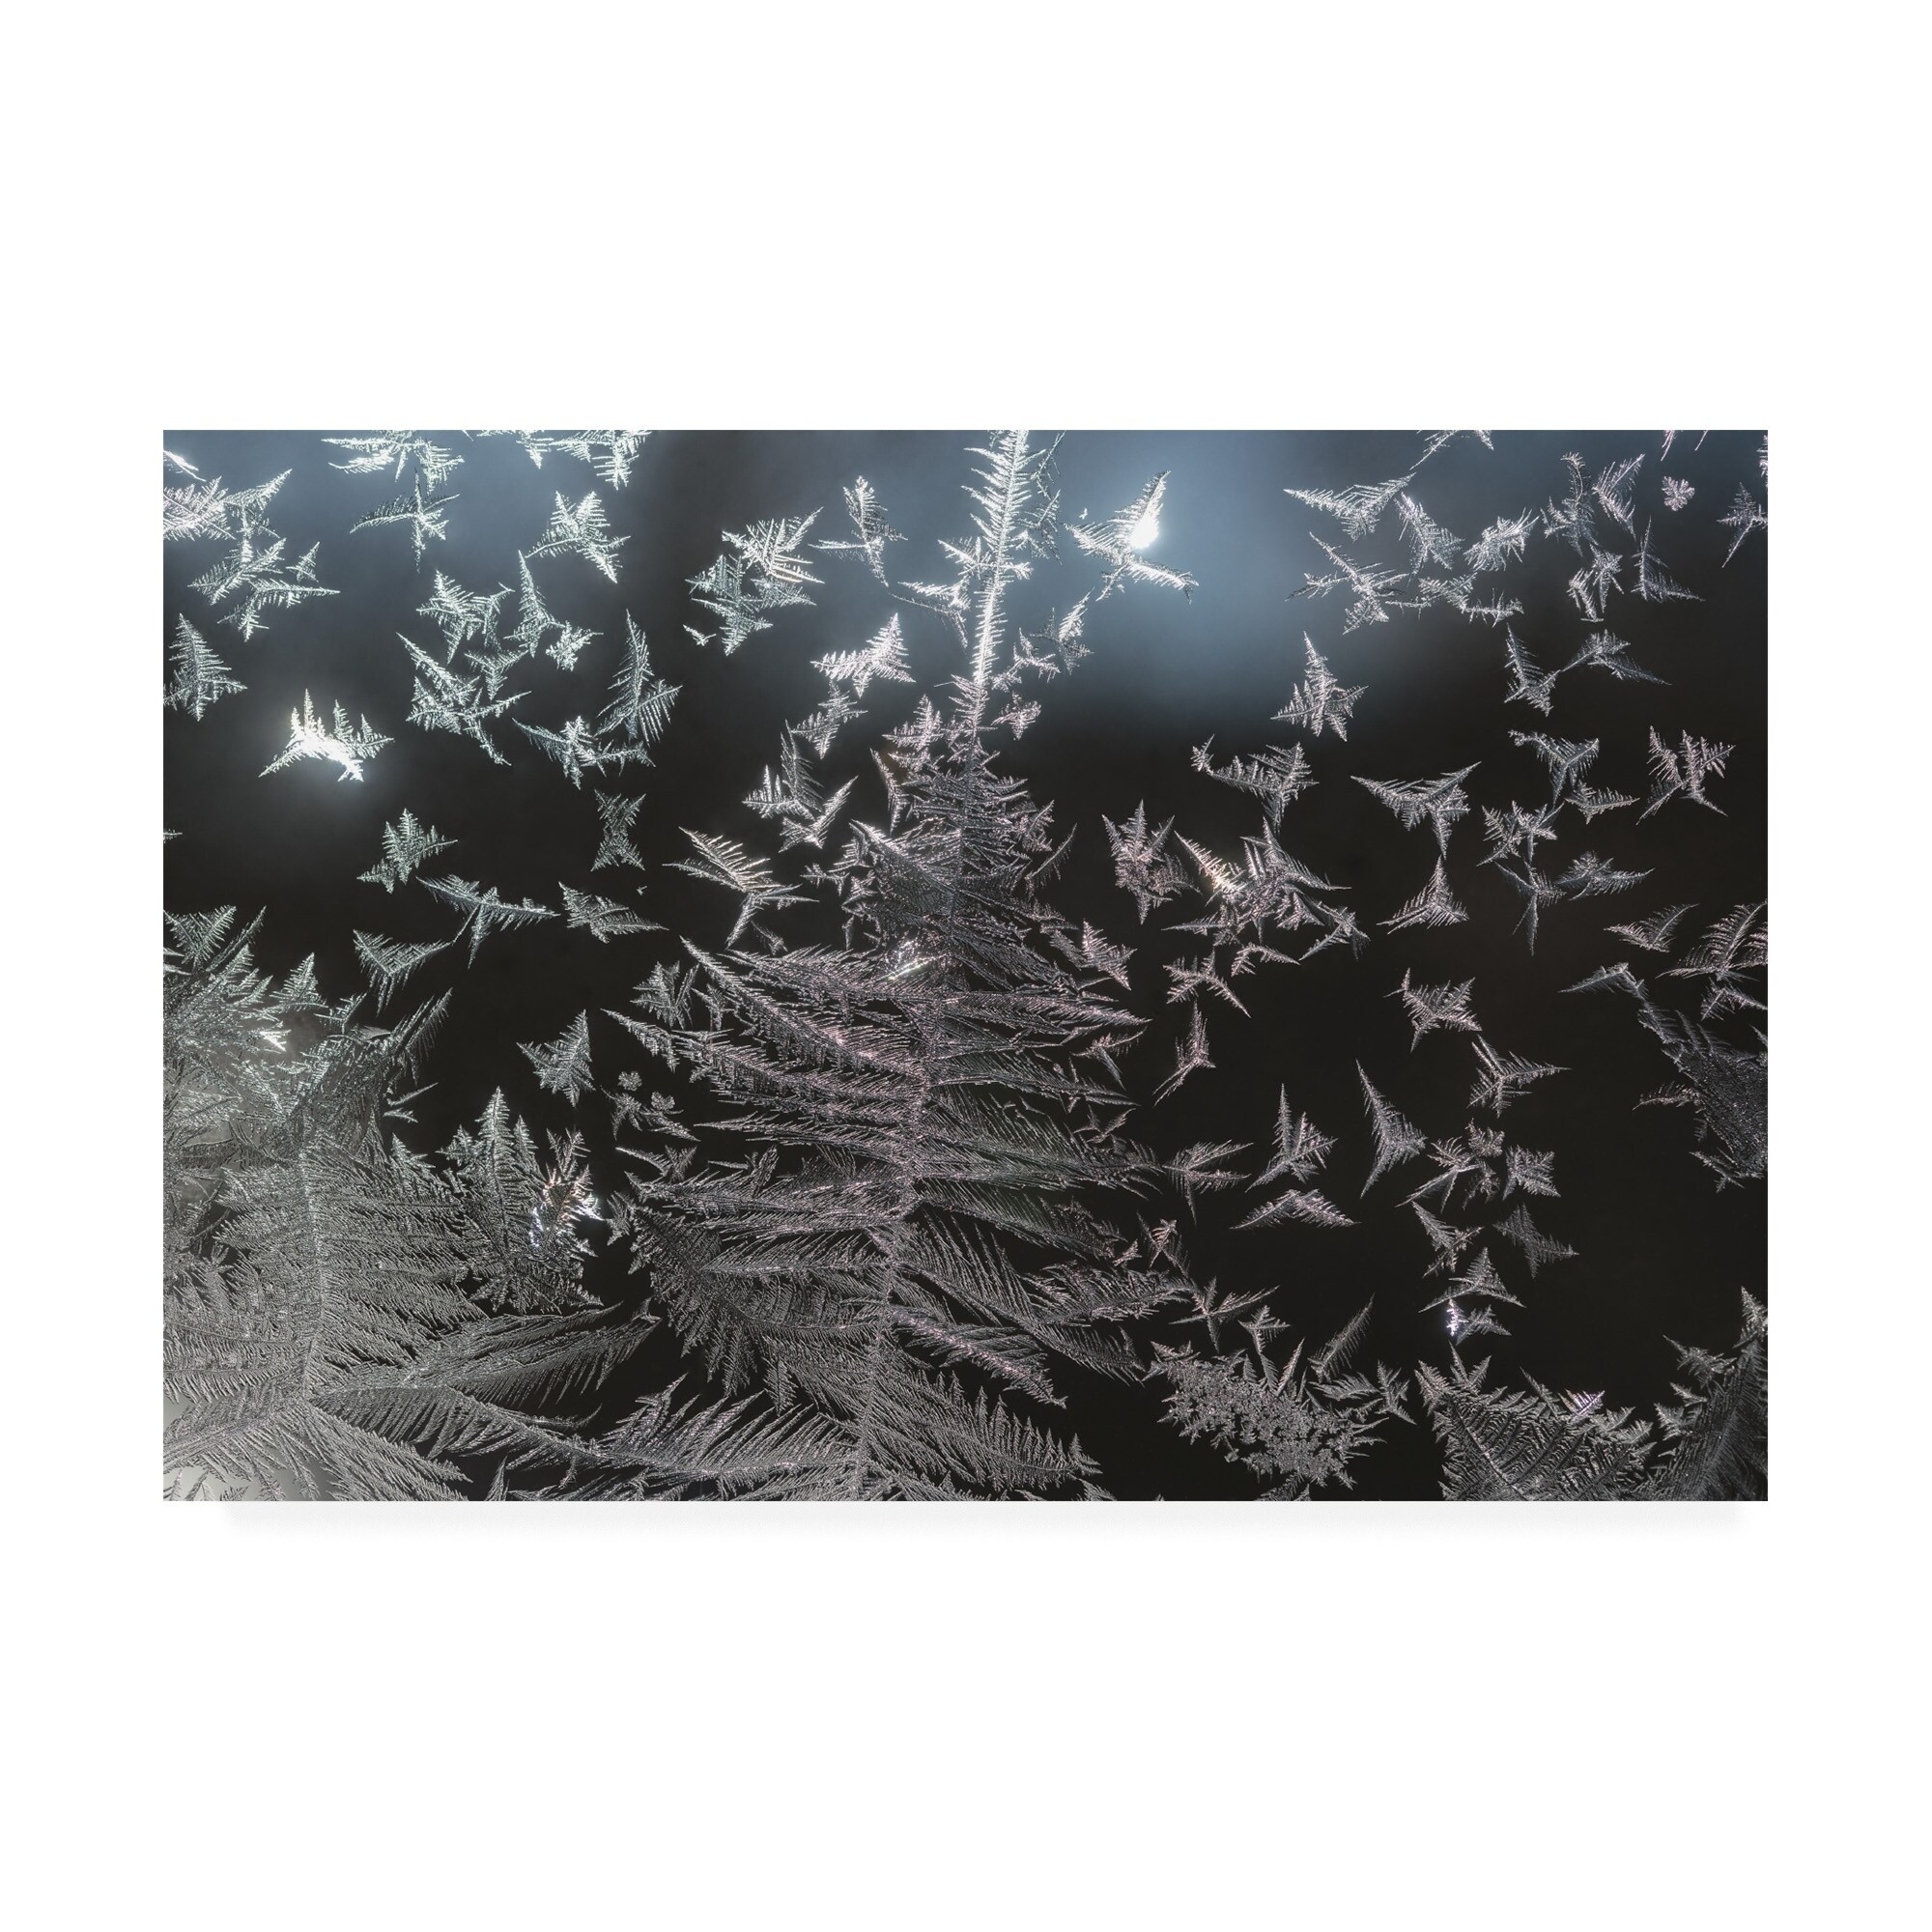 Kurt Shaffer Photographs 'Ice crystal patterns on my window' Canvas Art